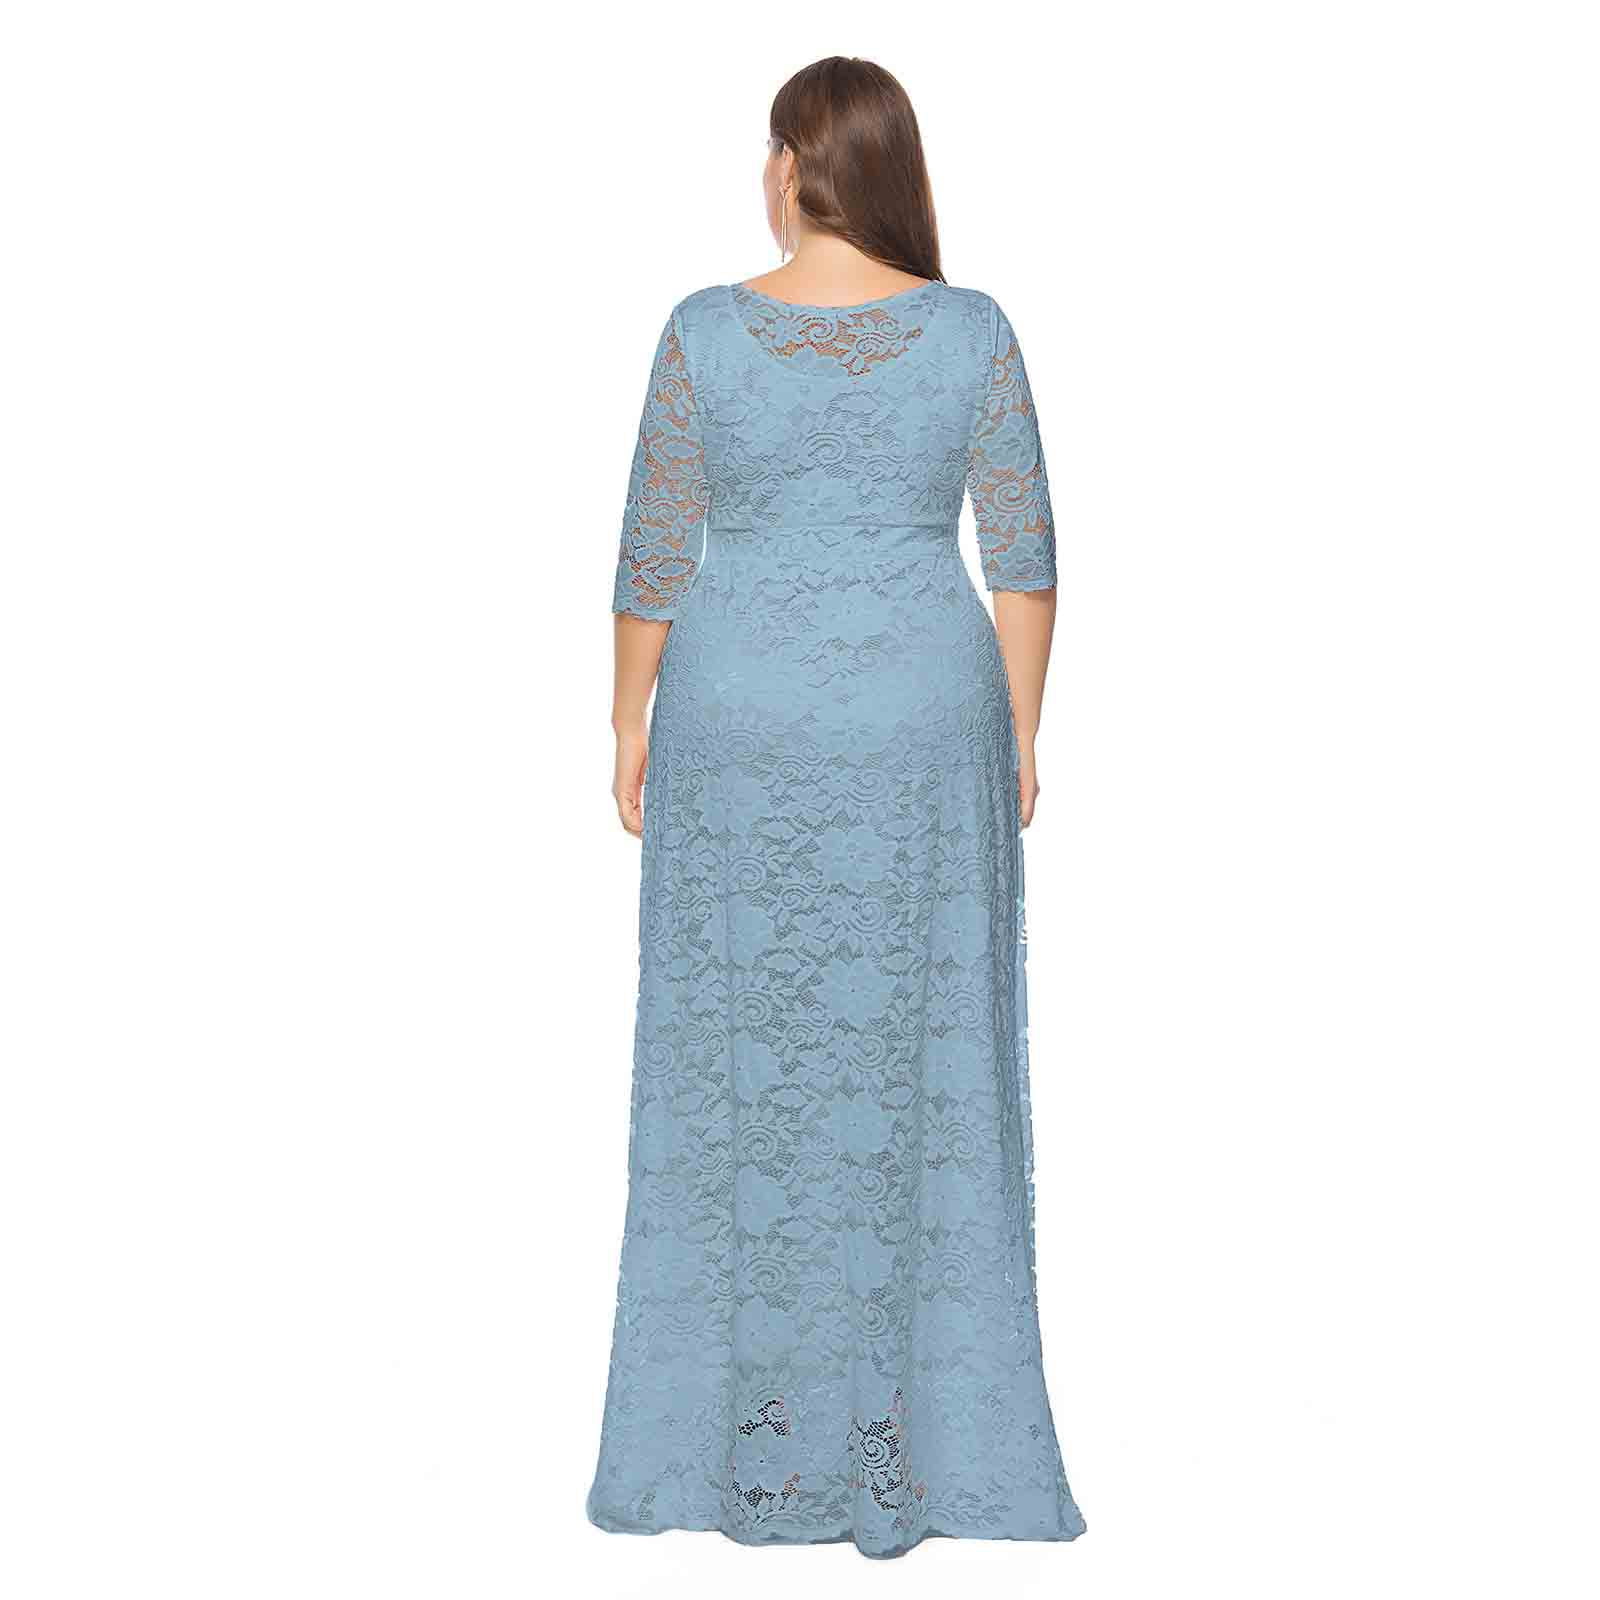 lcziwo Plus Size Maxi Dress for Women Wedding Guest 3/4 Sleeve